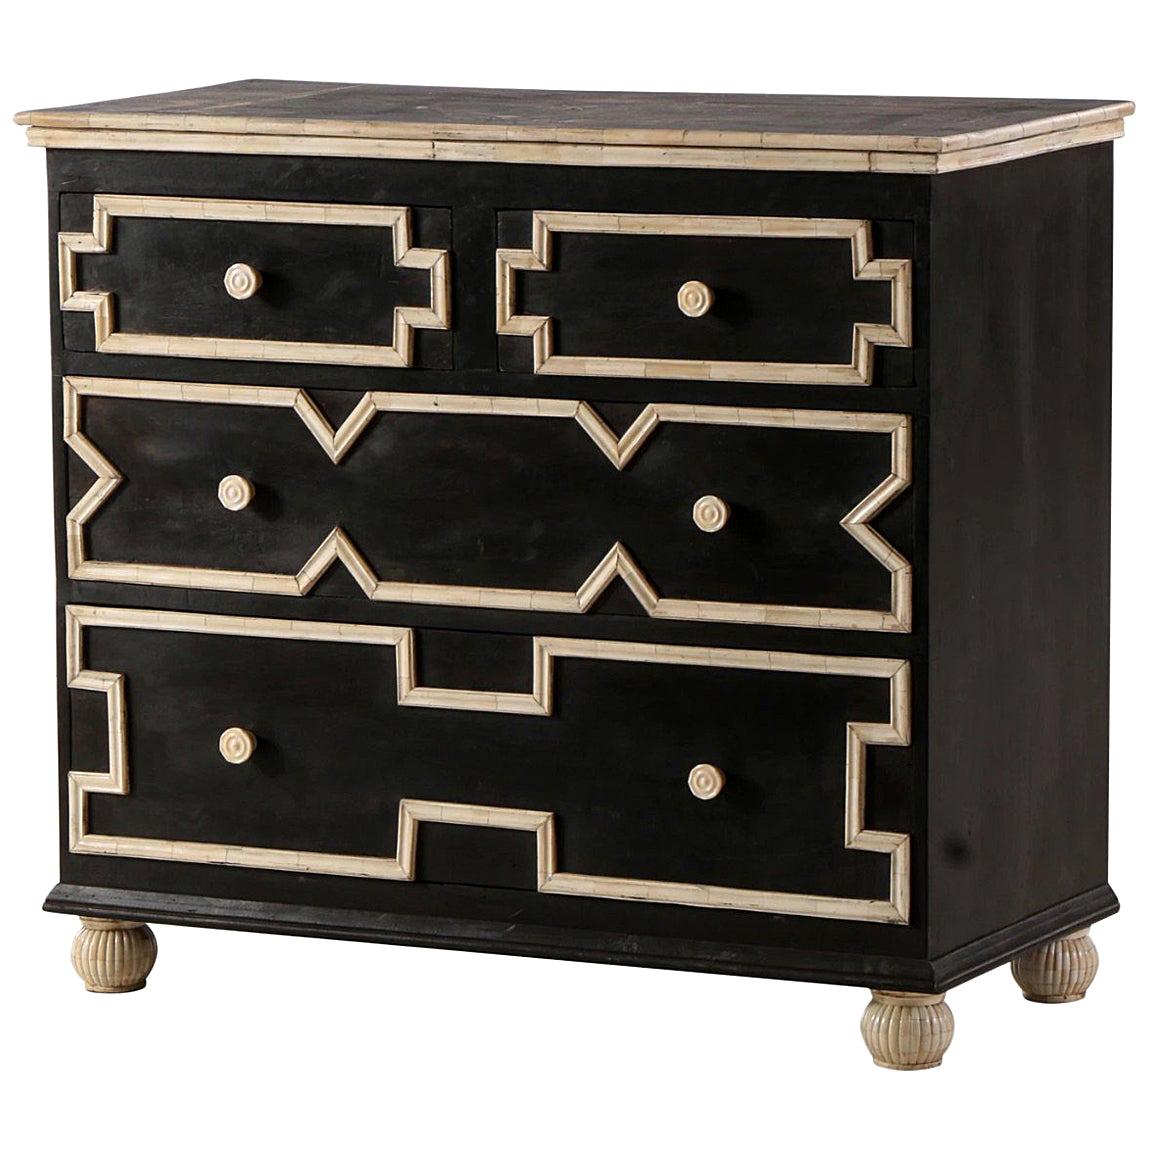 Glamorous Bone Trim Wood Chest Dresser Cabinet- Deco Dorothy Draper Style For Sale